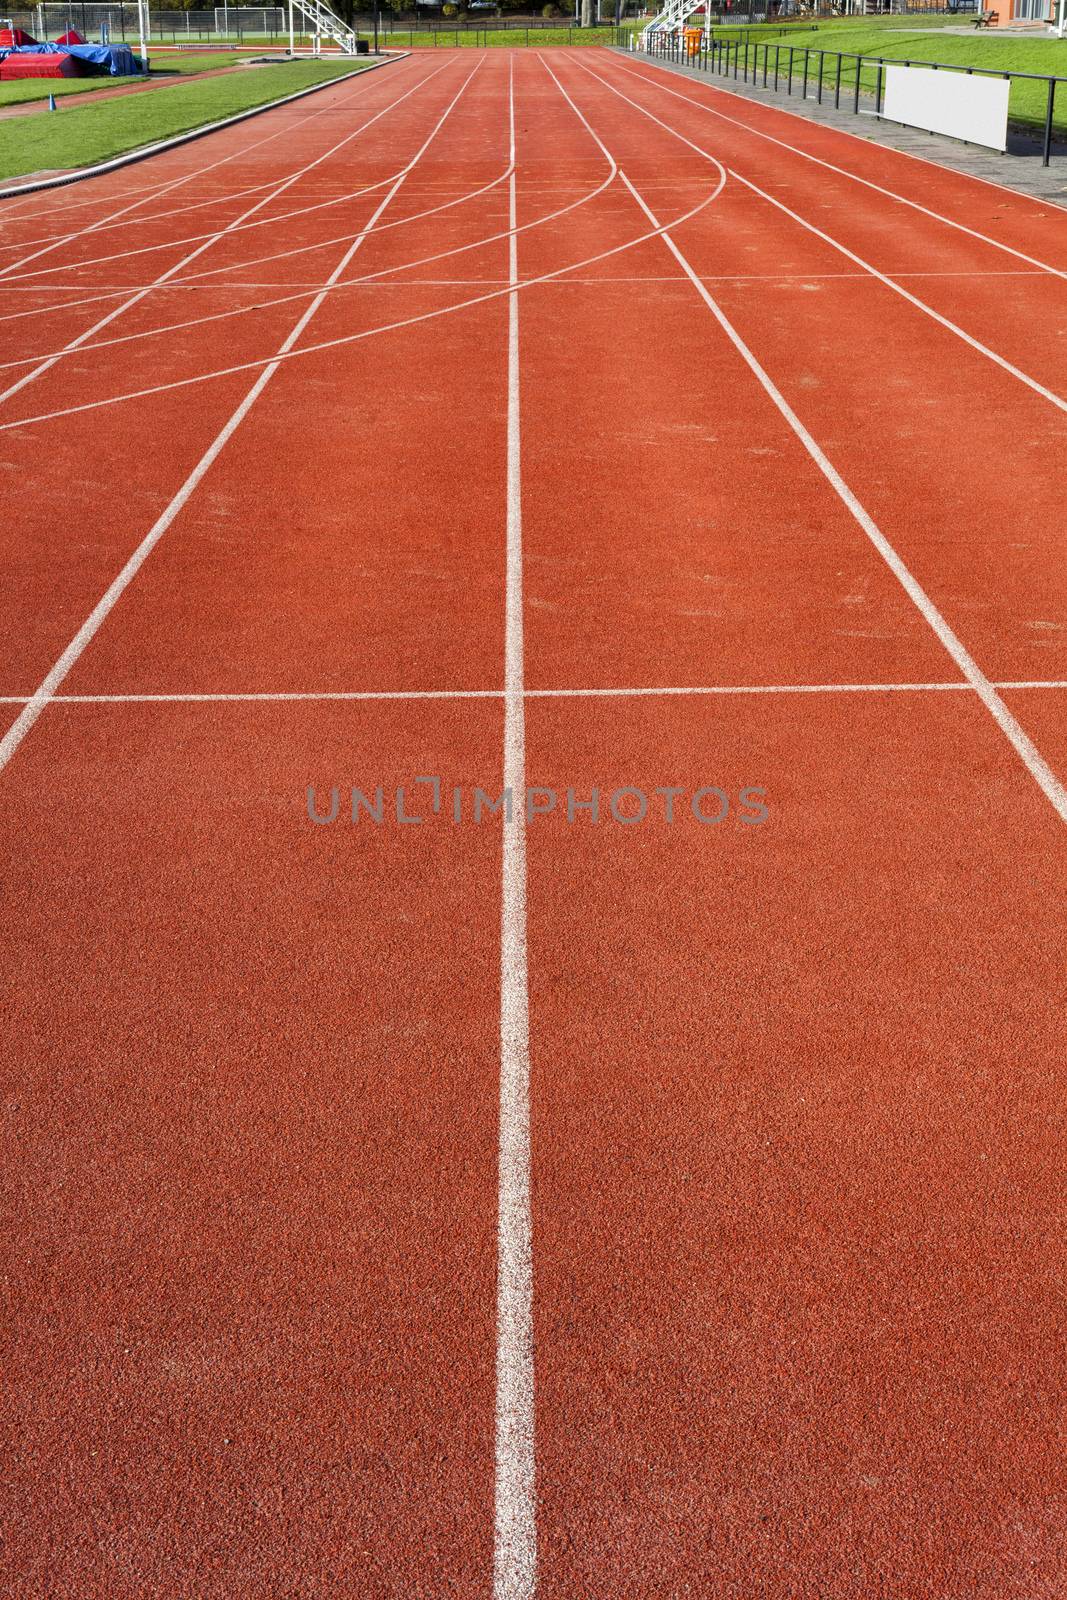 Athletics track on the public stadium in the netherlands